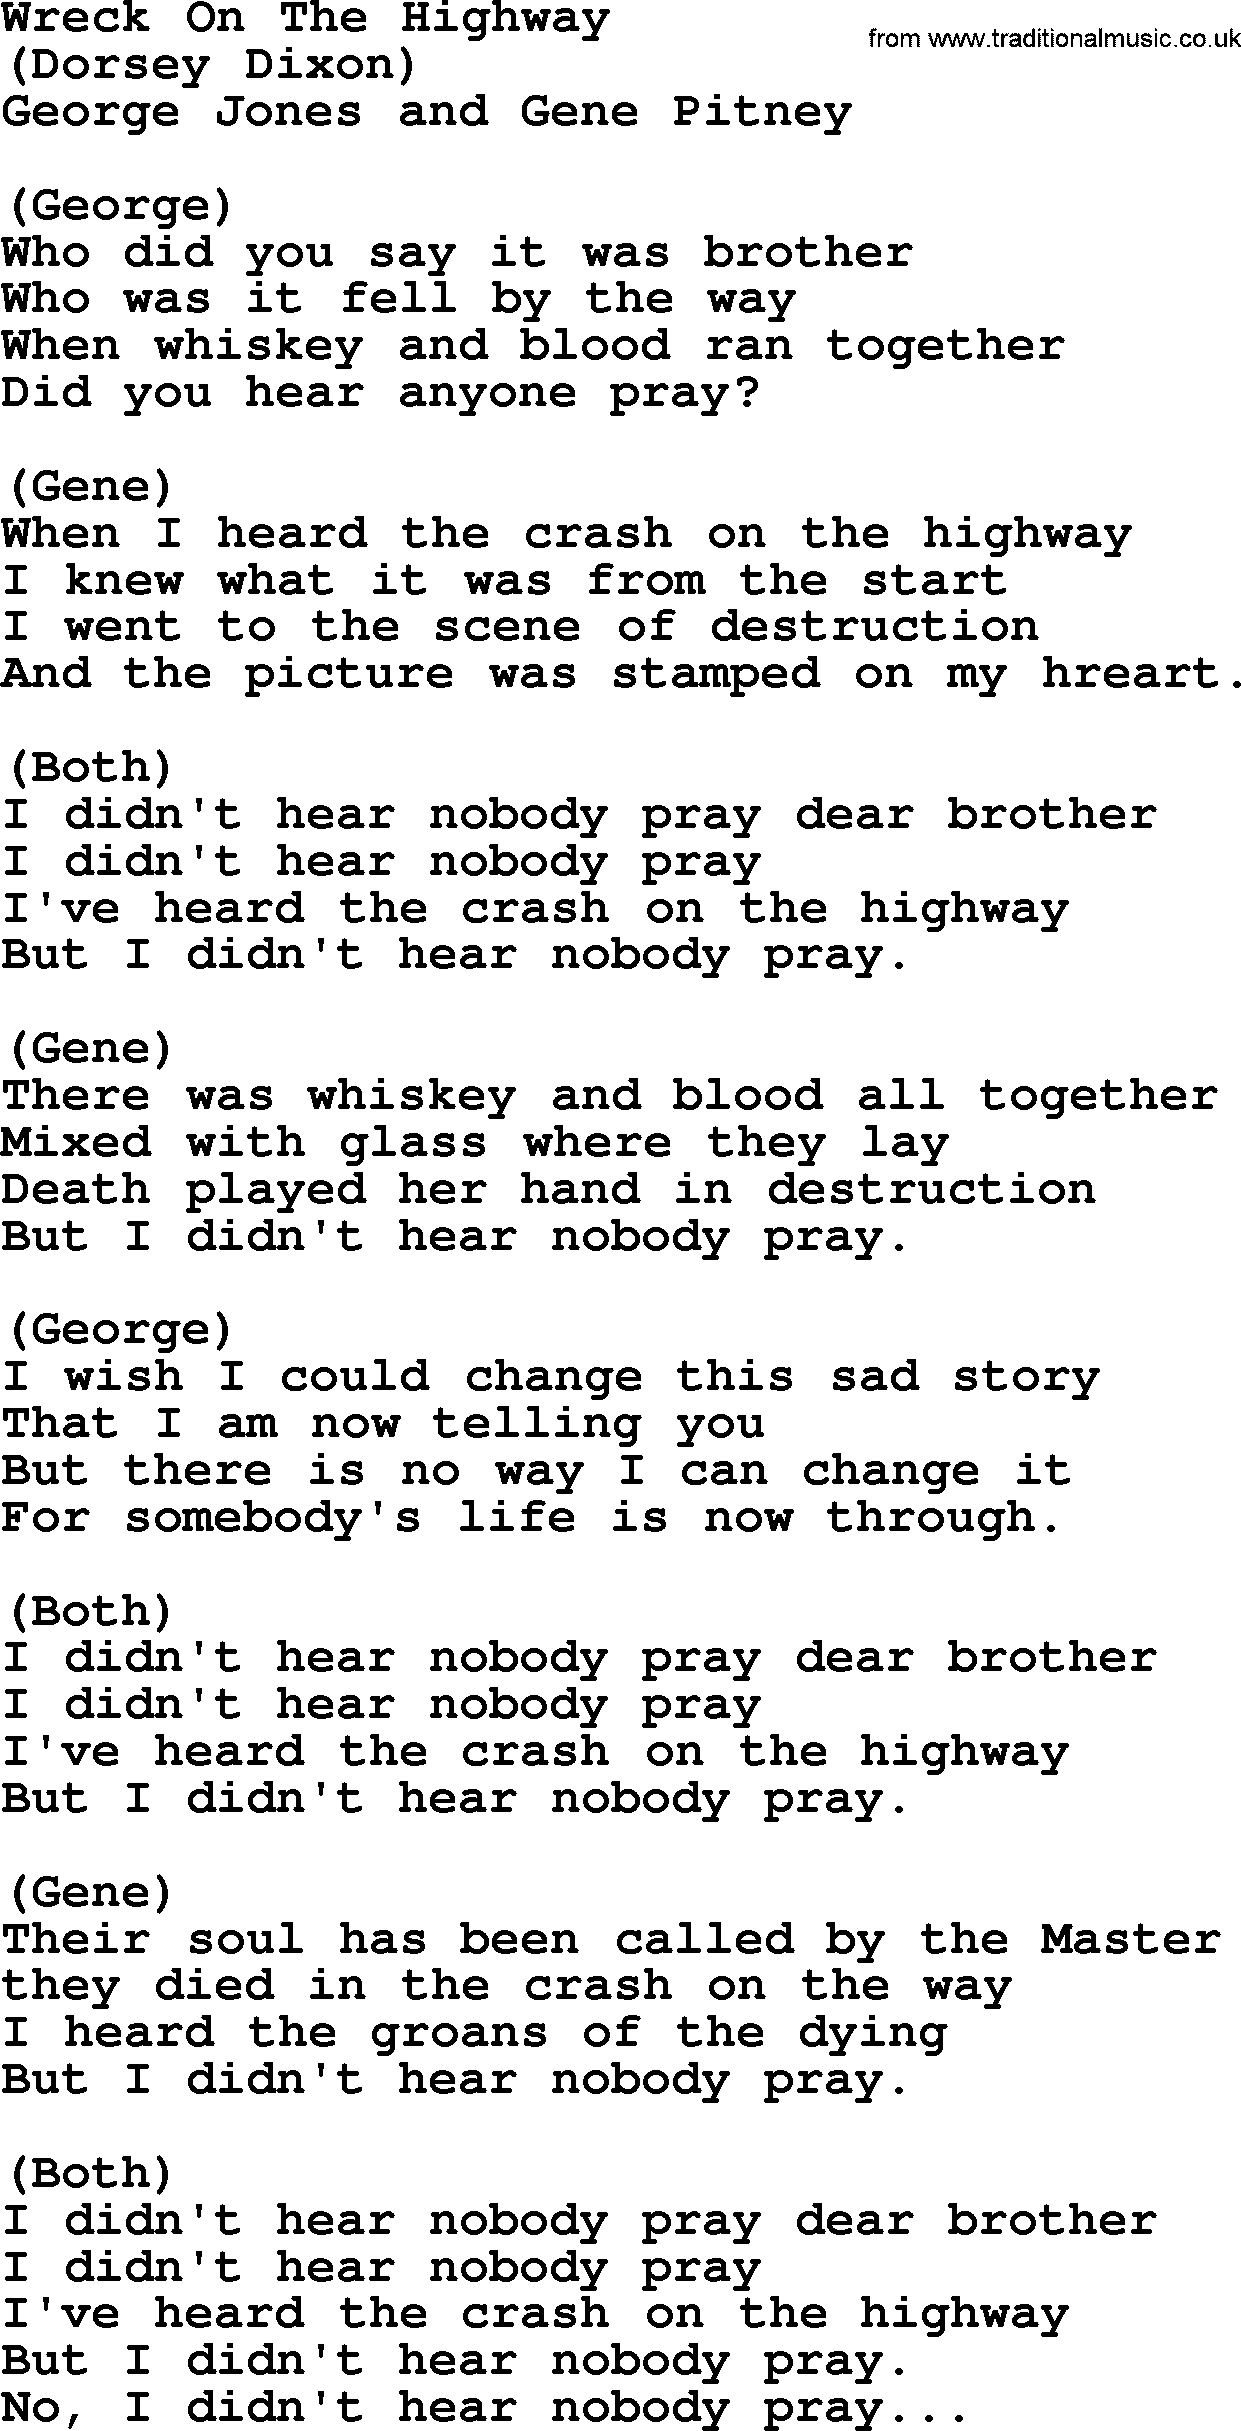 George Jones song: Wreck On The Highway, lyrics